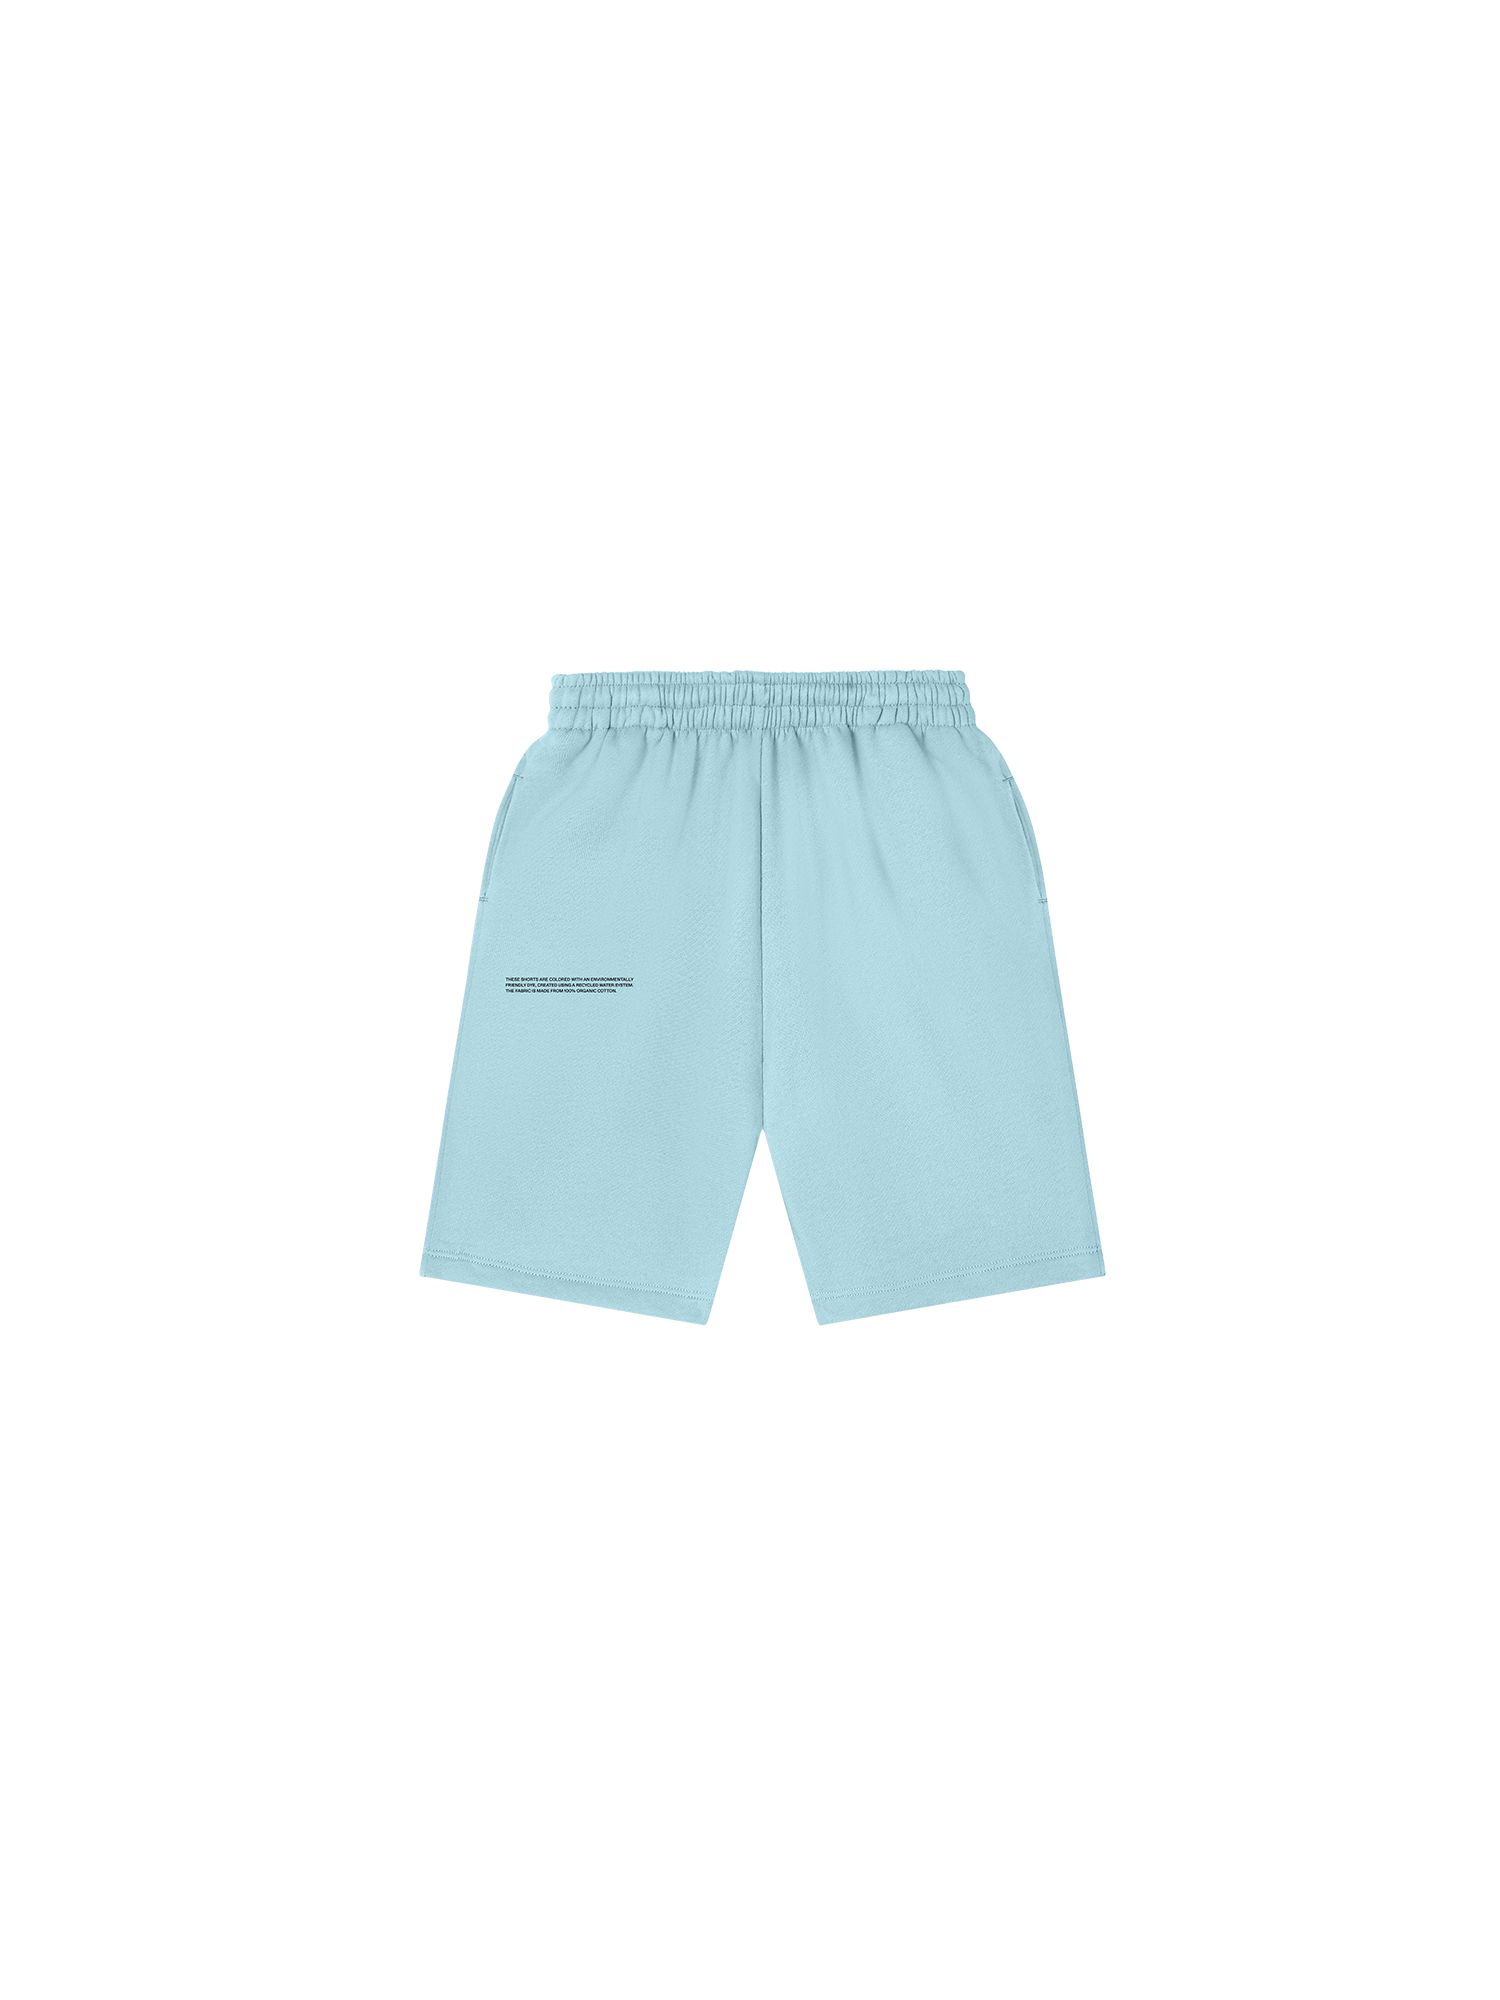 Kids 365 Long Shorts Core—celestial blue packshot-3